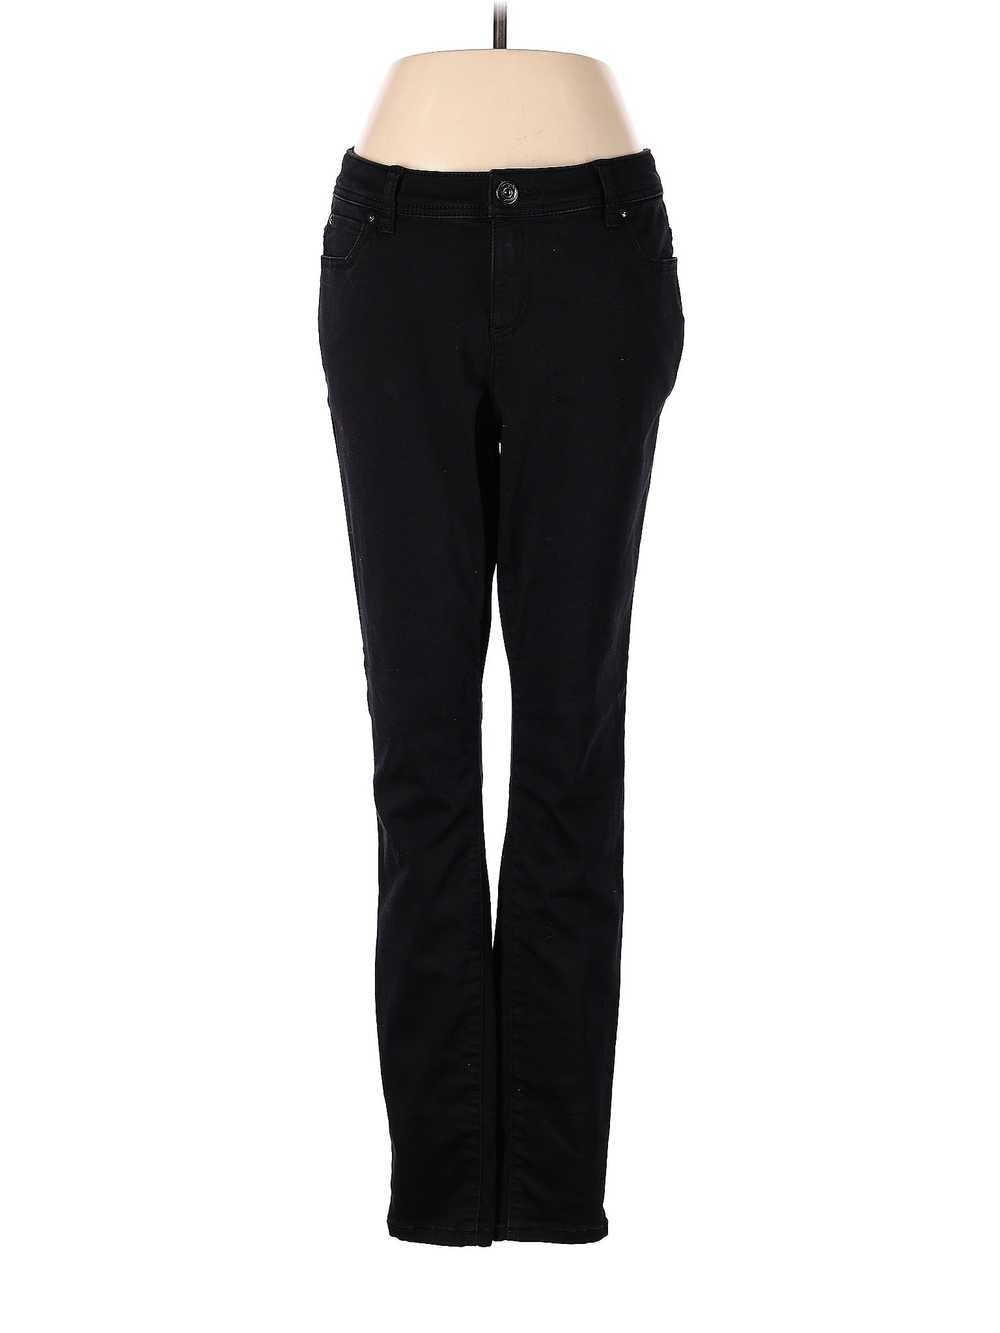 INC International Concepts Women Black Jeans 8 - image 1